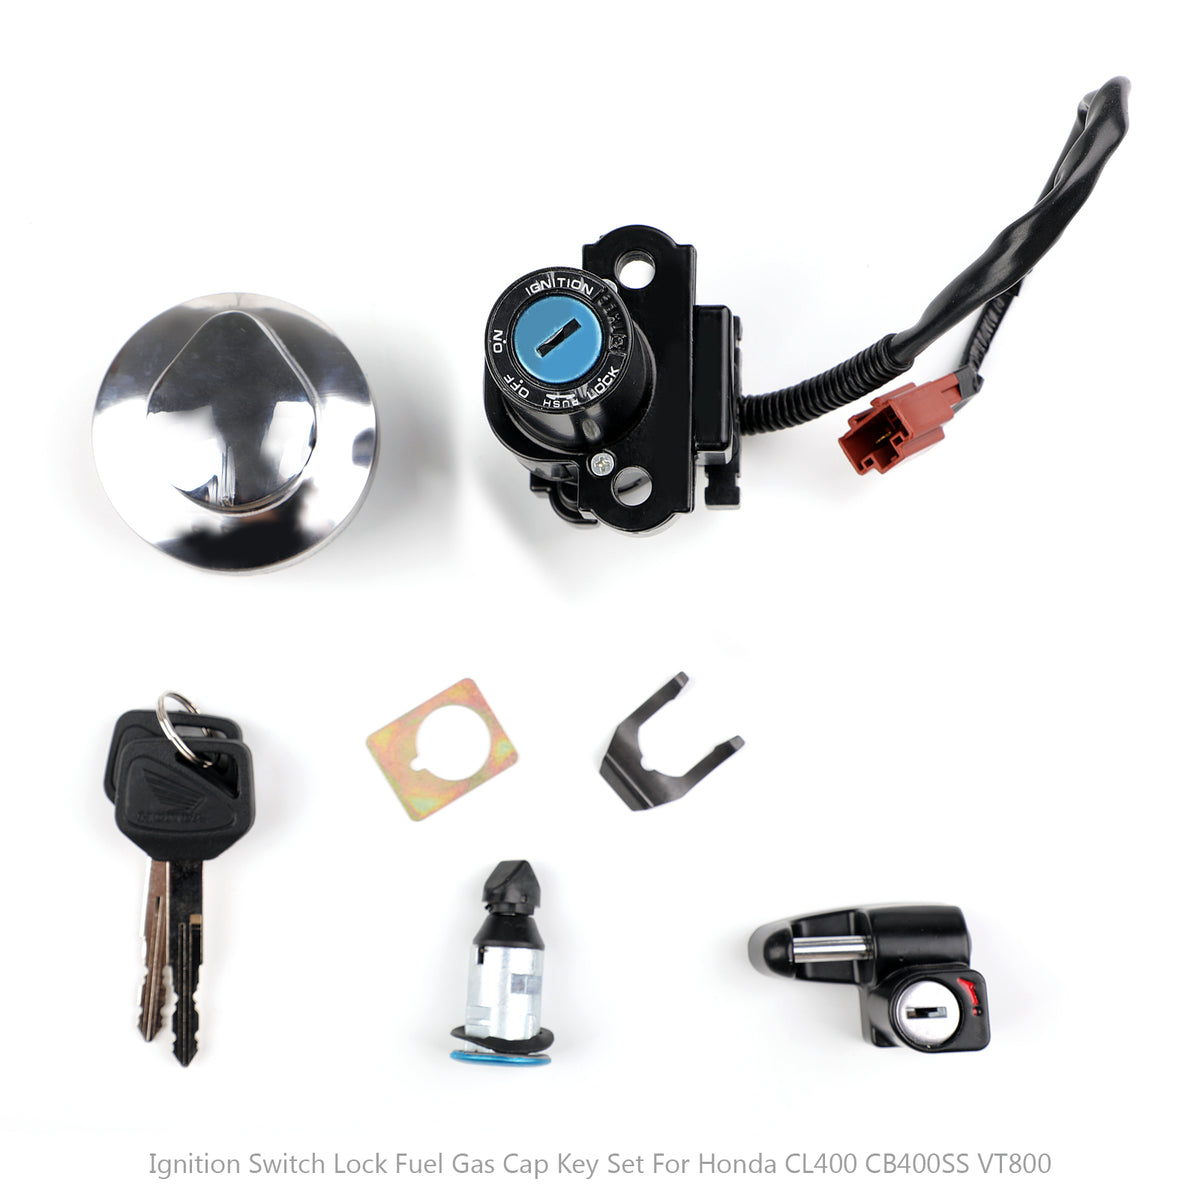 Ignition Switch Fuel Gas Cap Helmet Lock Set Fit for Honda CB400 CB 400 SS 02-08